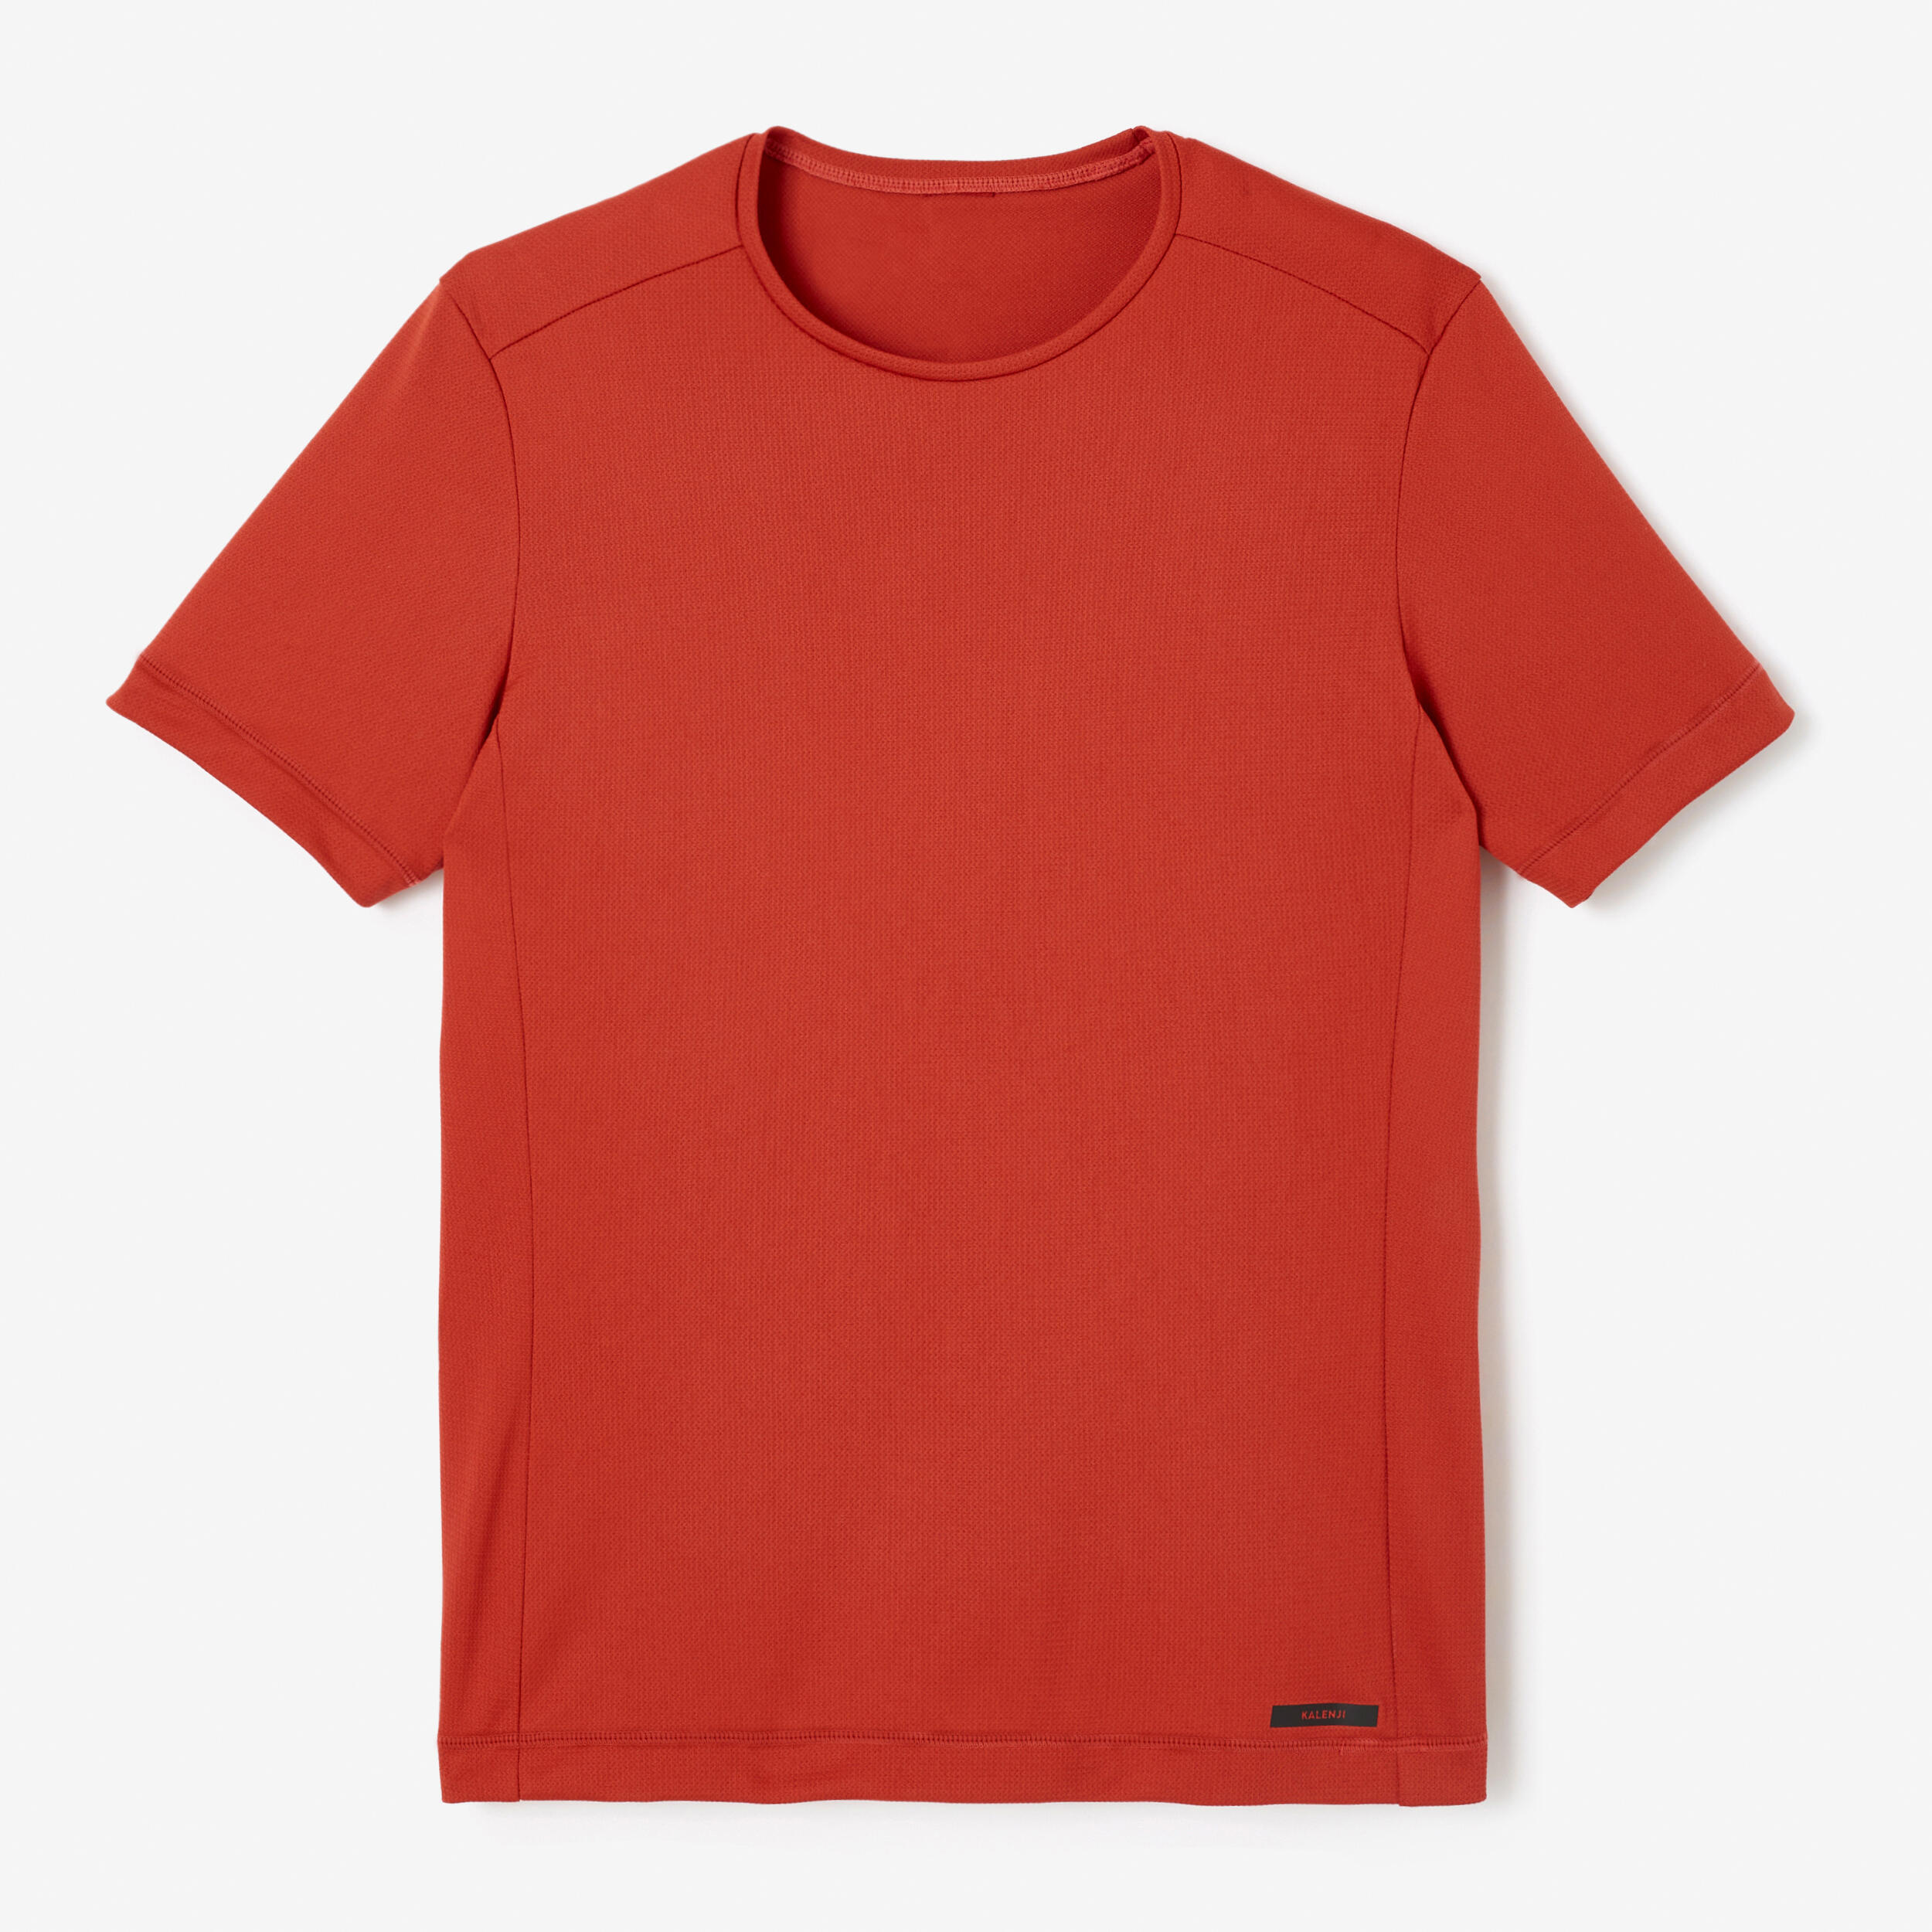 Dry Men's Running Breathable T-Shirt - Brick Red 6/6